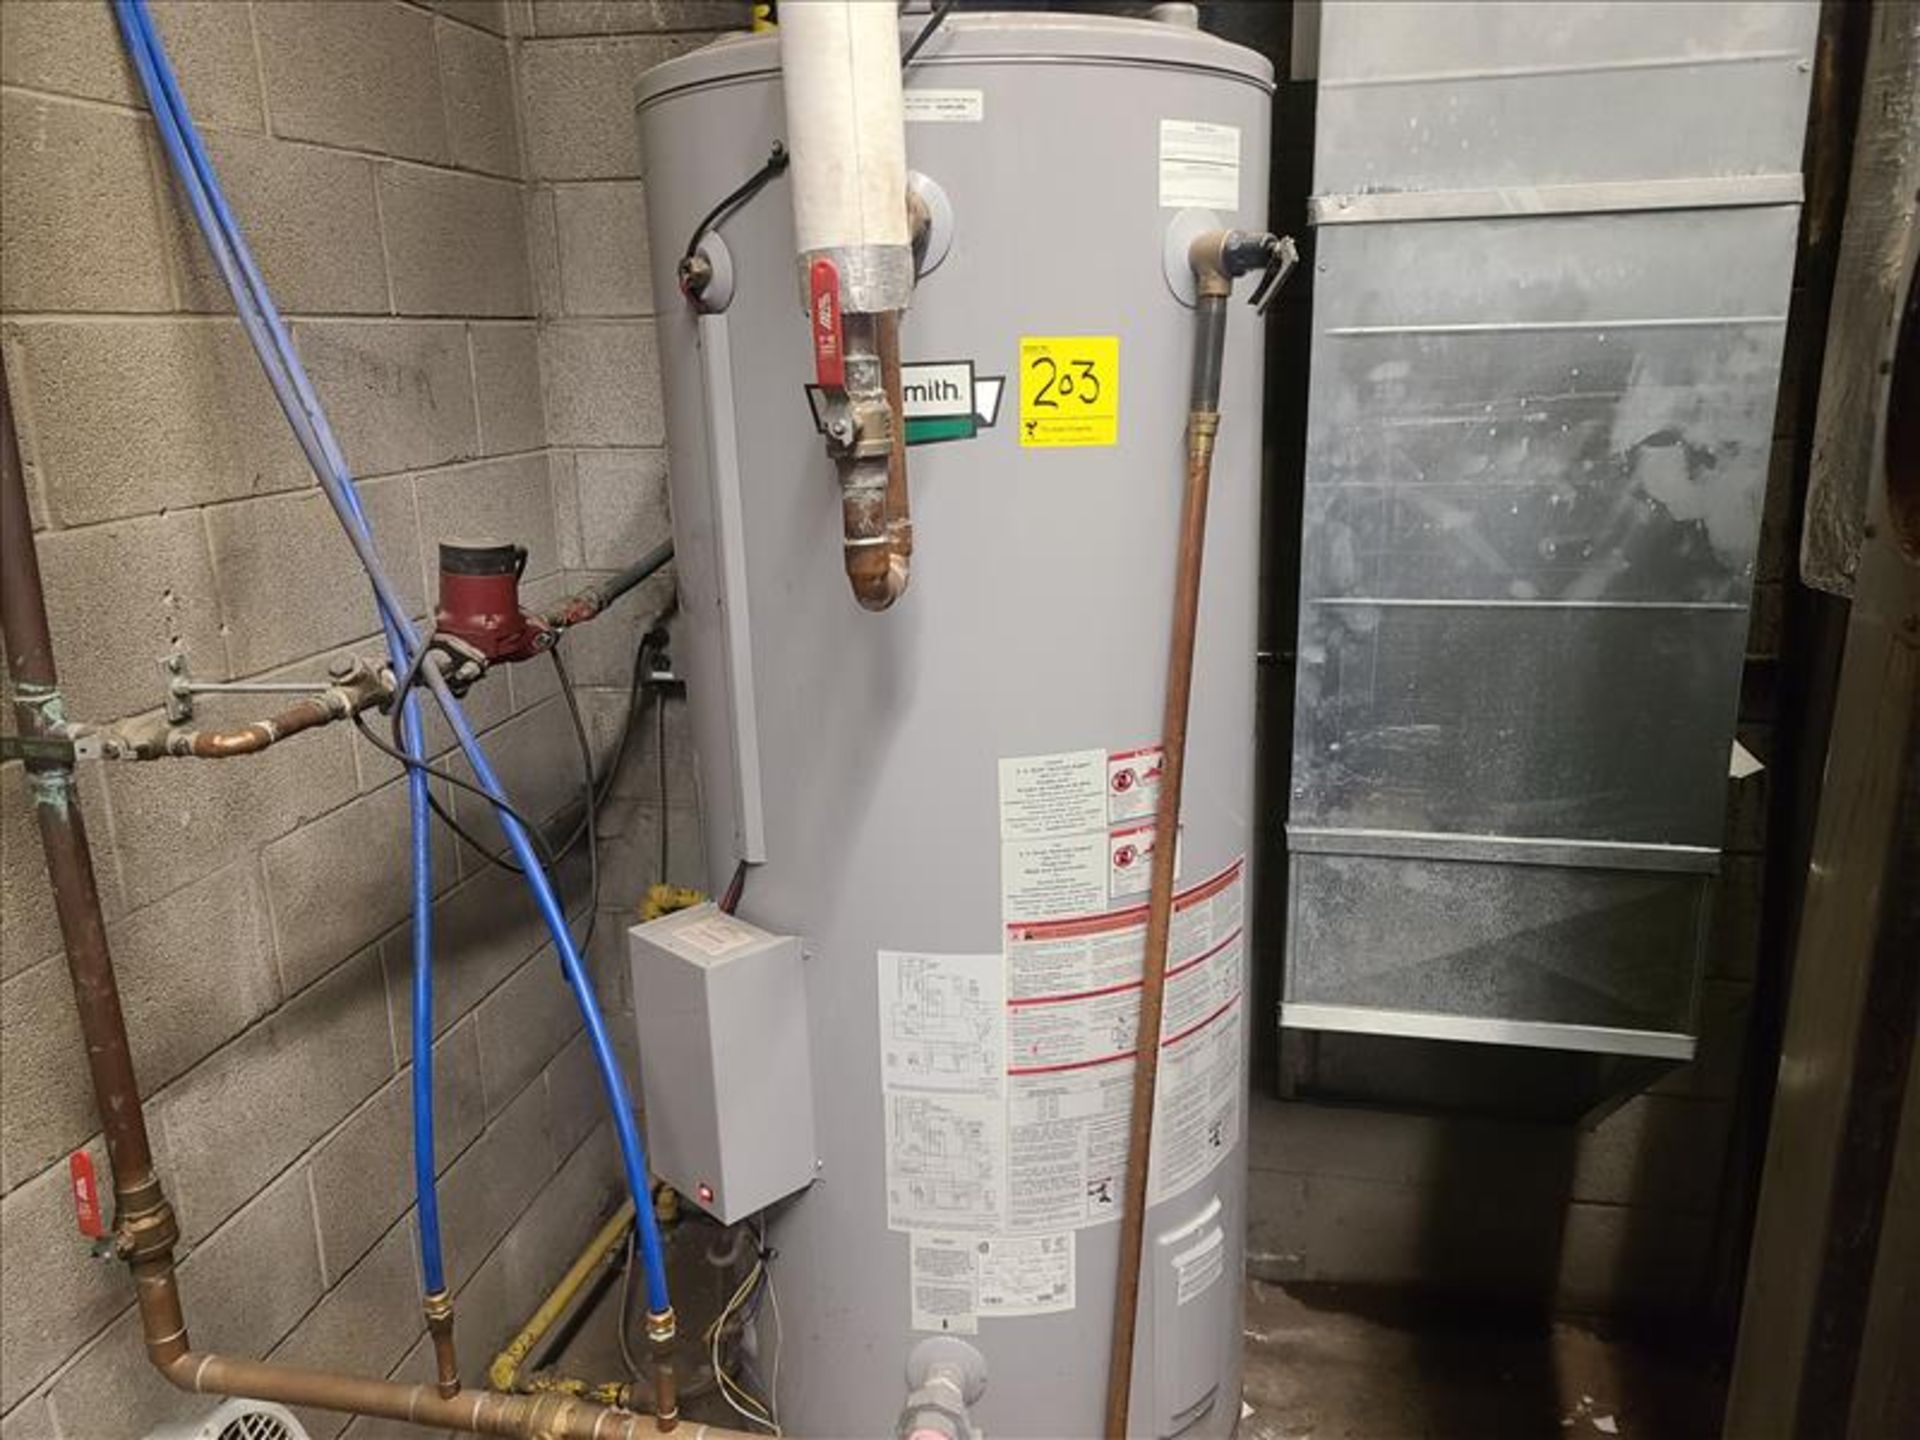 AO Smith Water Heater, mod. BTRC-197 118, ser. no. 2228130222150, natural gas [Loc.Boiler Room]